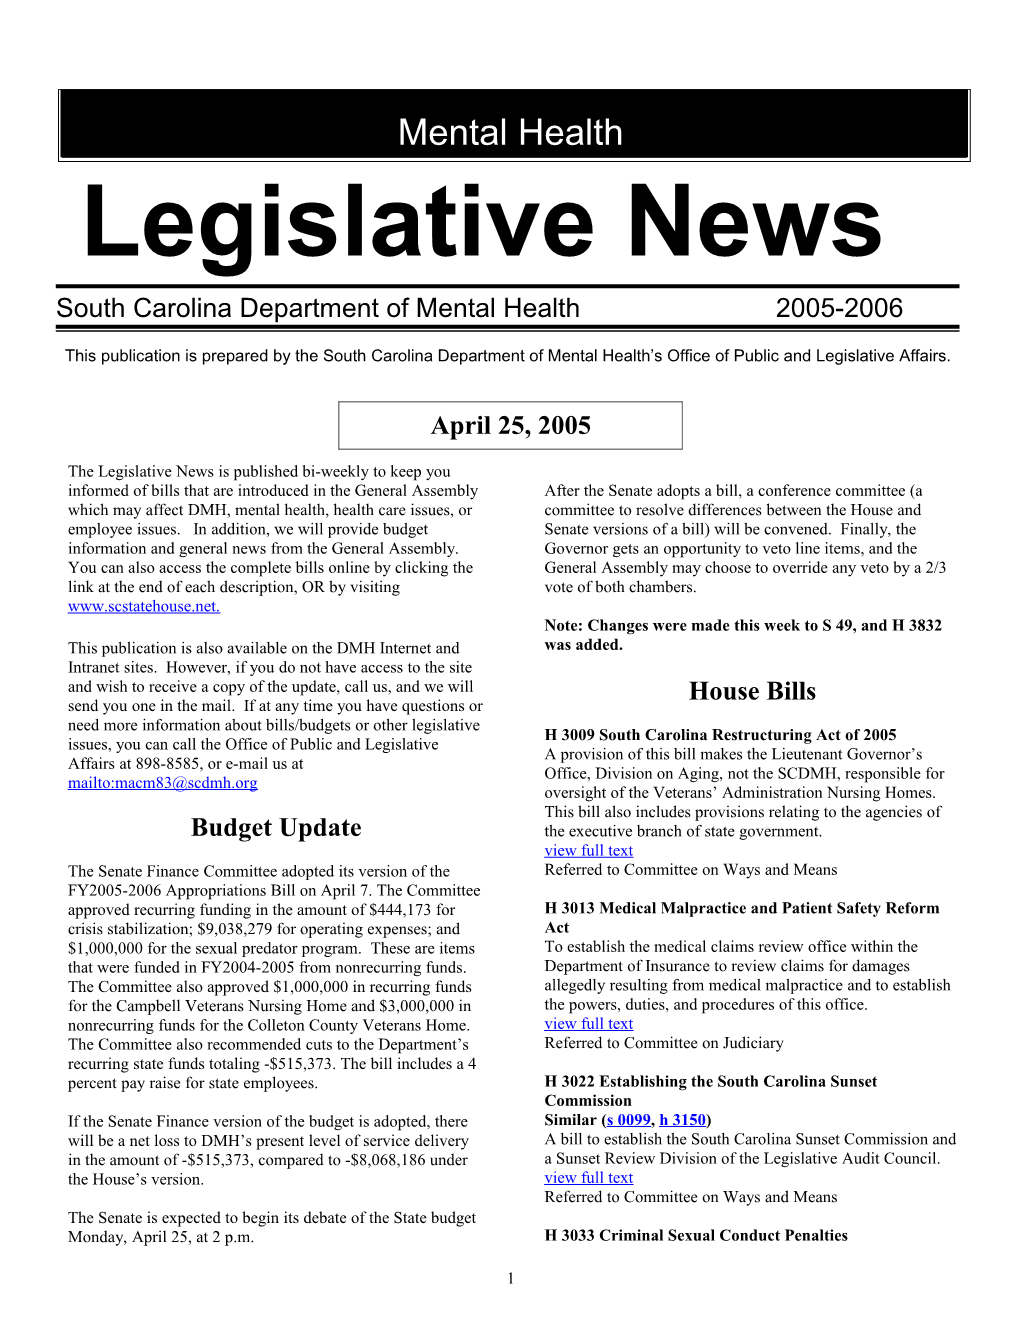 Legislative News